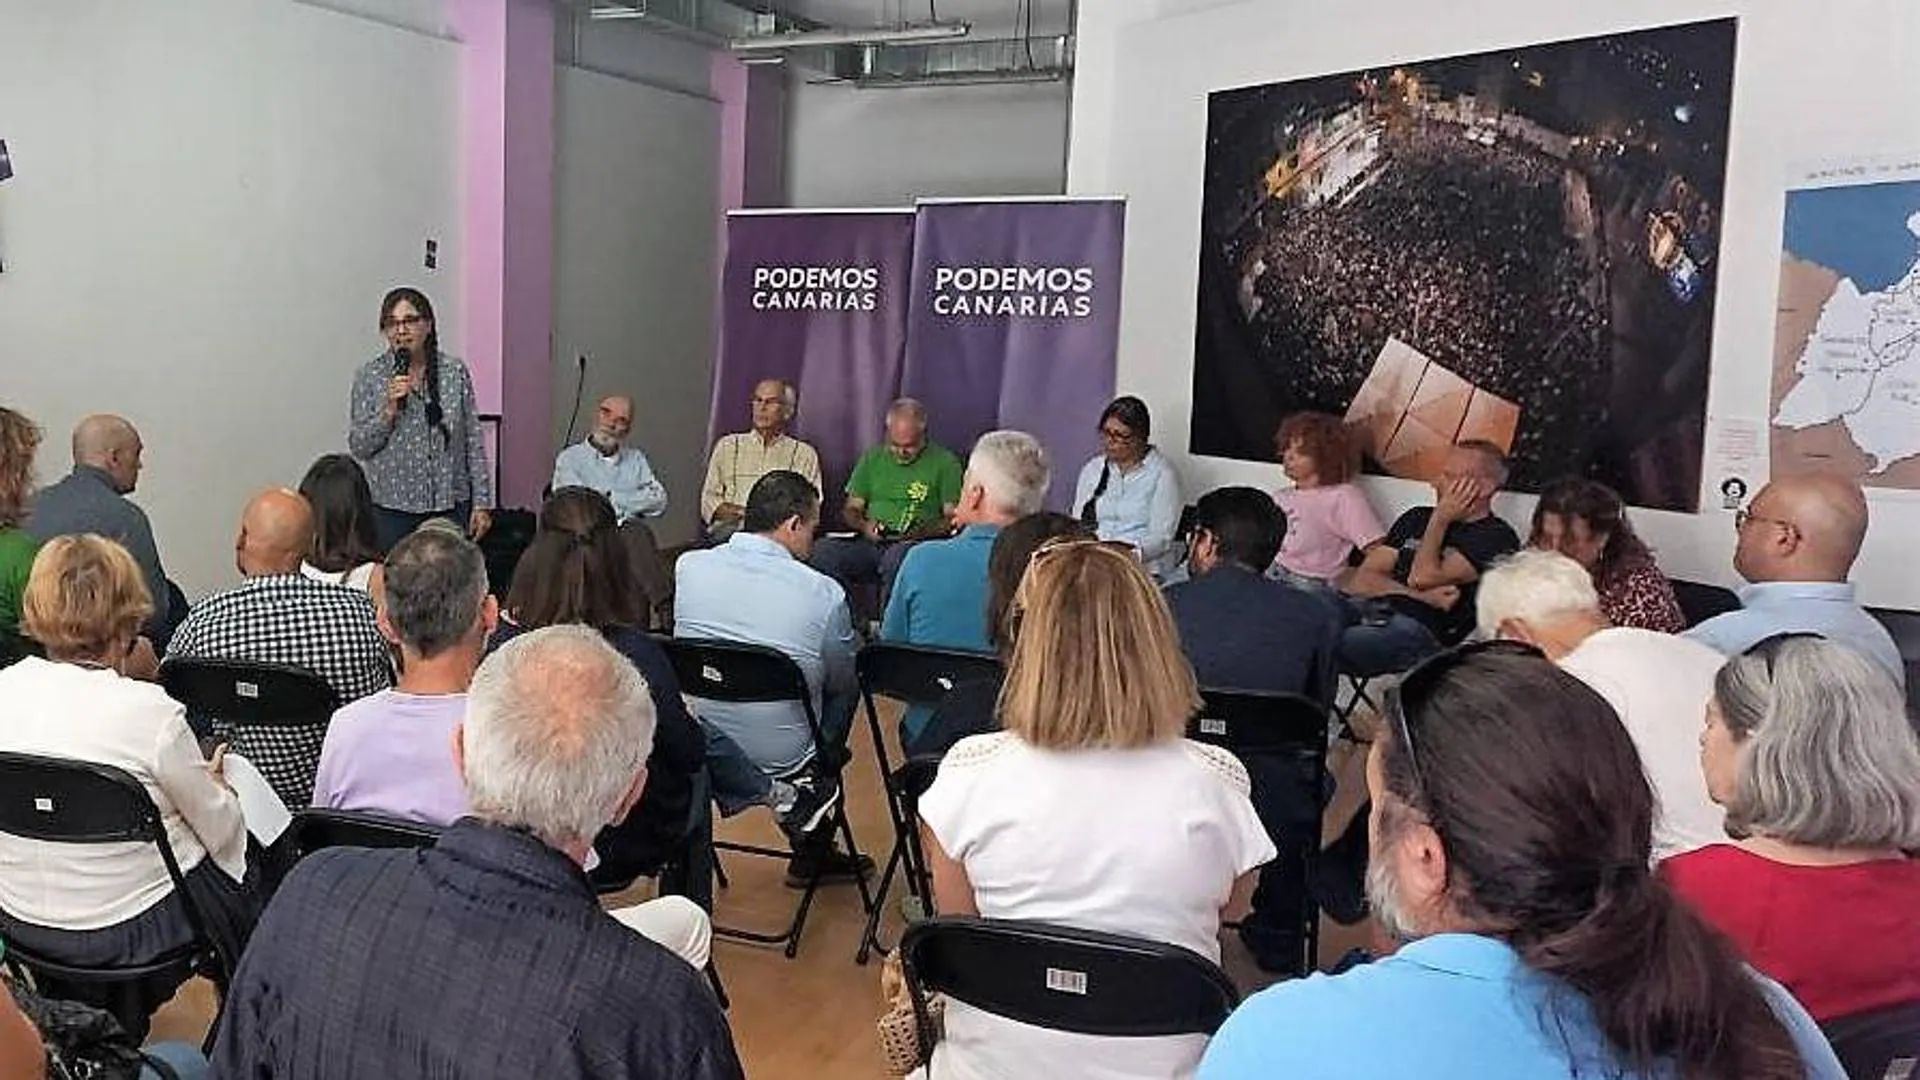 Unidas sí Podemos finalizes its electoral program in a participatory process